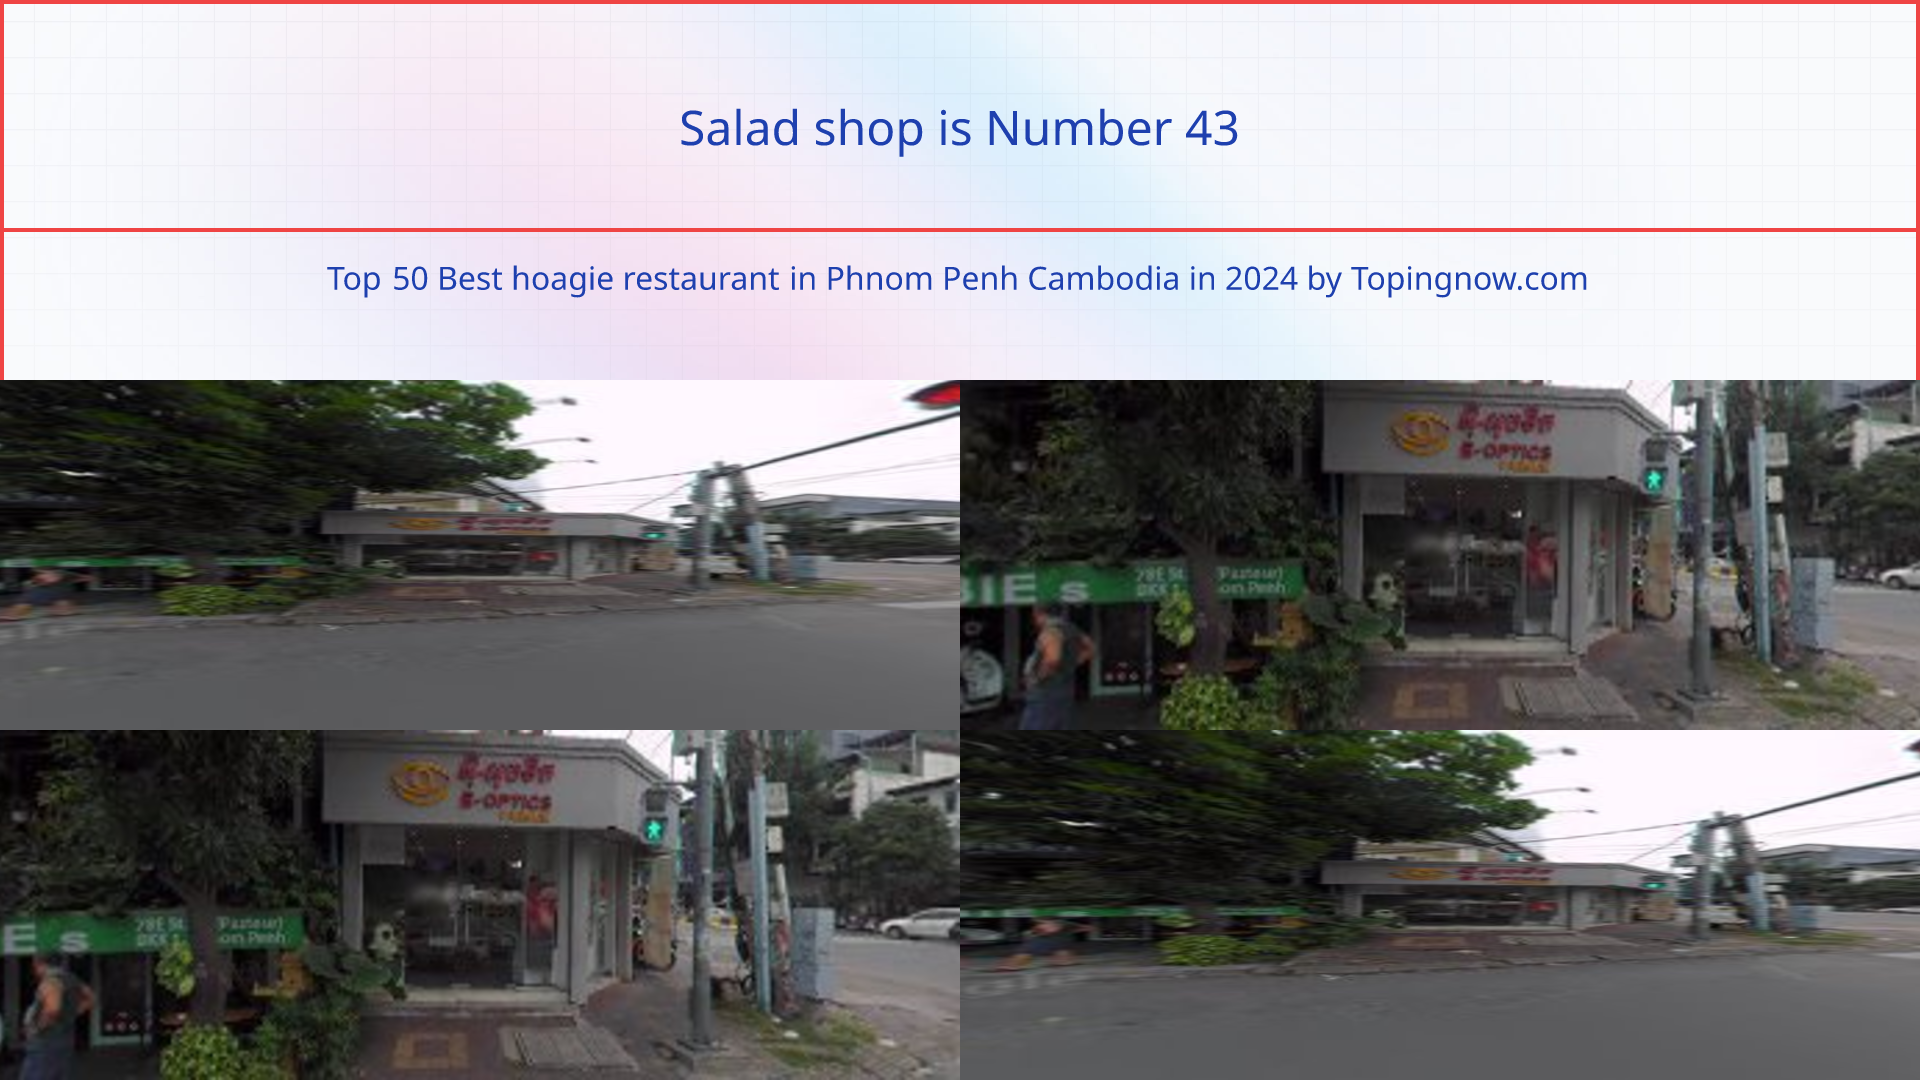 Salad shop: Top 50 Best hoagie restaurant in Phnom Penh Cambodia in 2024